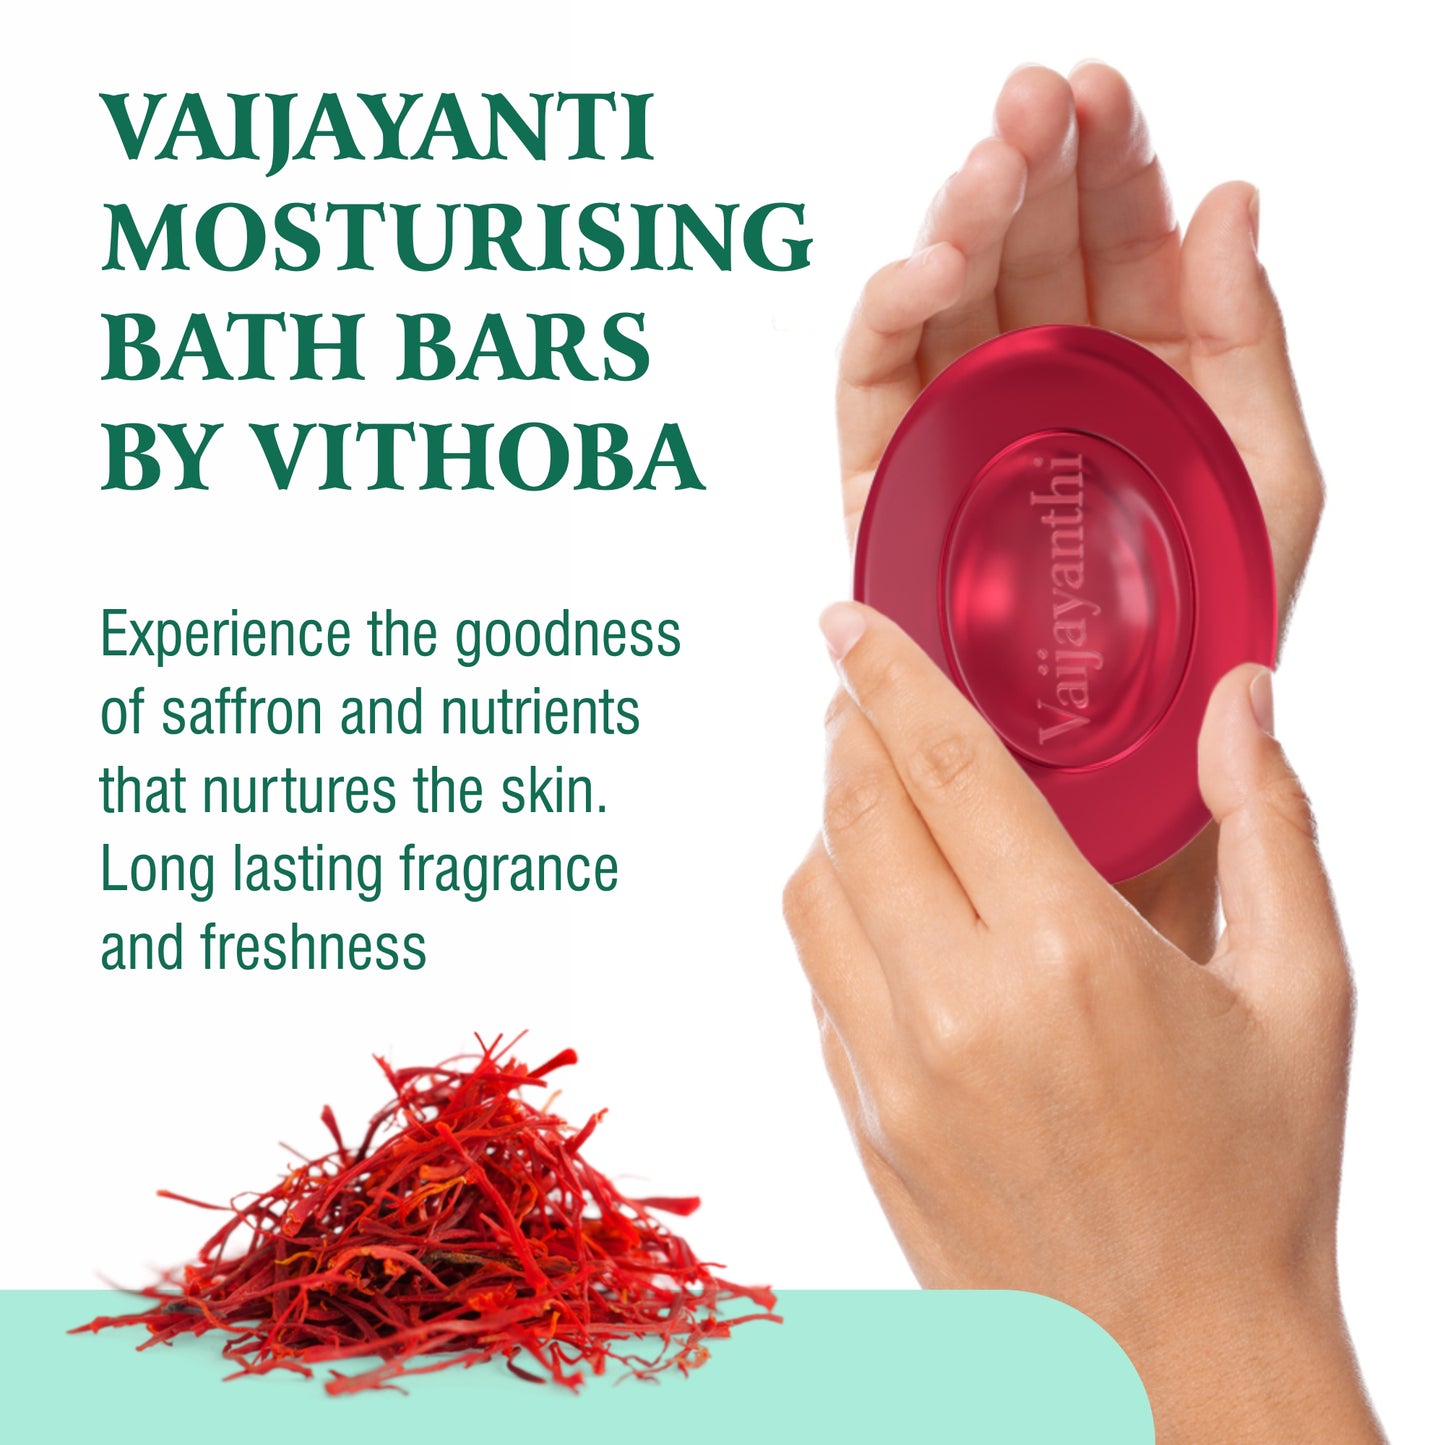 Vithoba Vaijayanthi हैंडक्राफ़्टेड केसर सोप बार और विथोबा आयुर्वेदिक रूटफिक्स टूथपेस्ट कॉम्बो पैक - 40g+75g